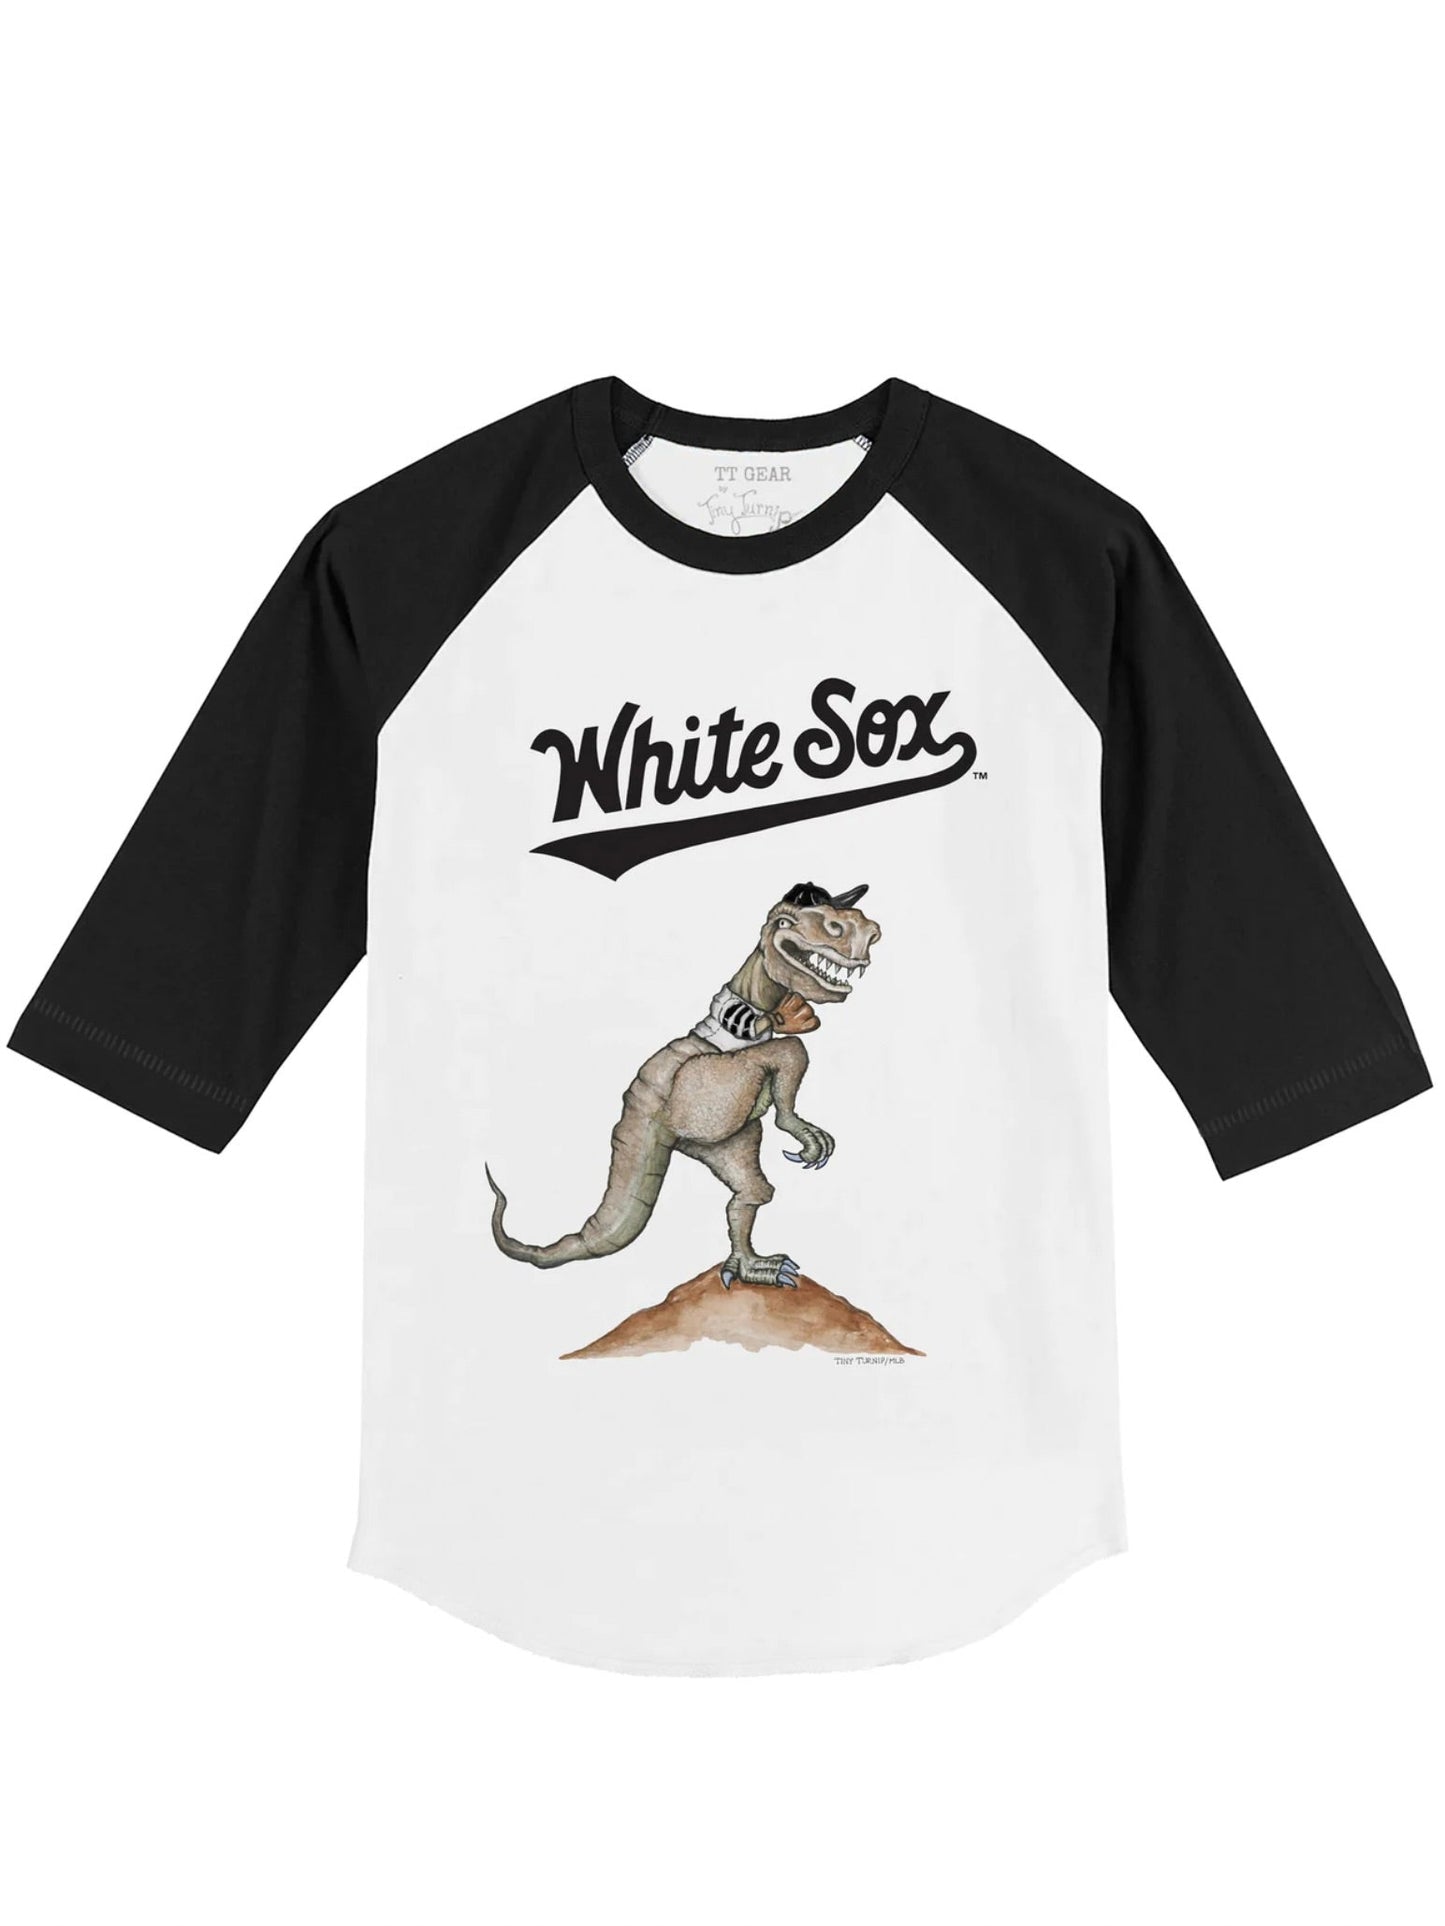 Chicago White Sox T Rex Baseball Shirt